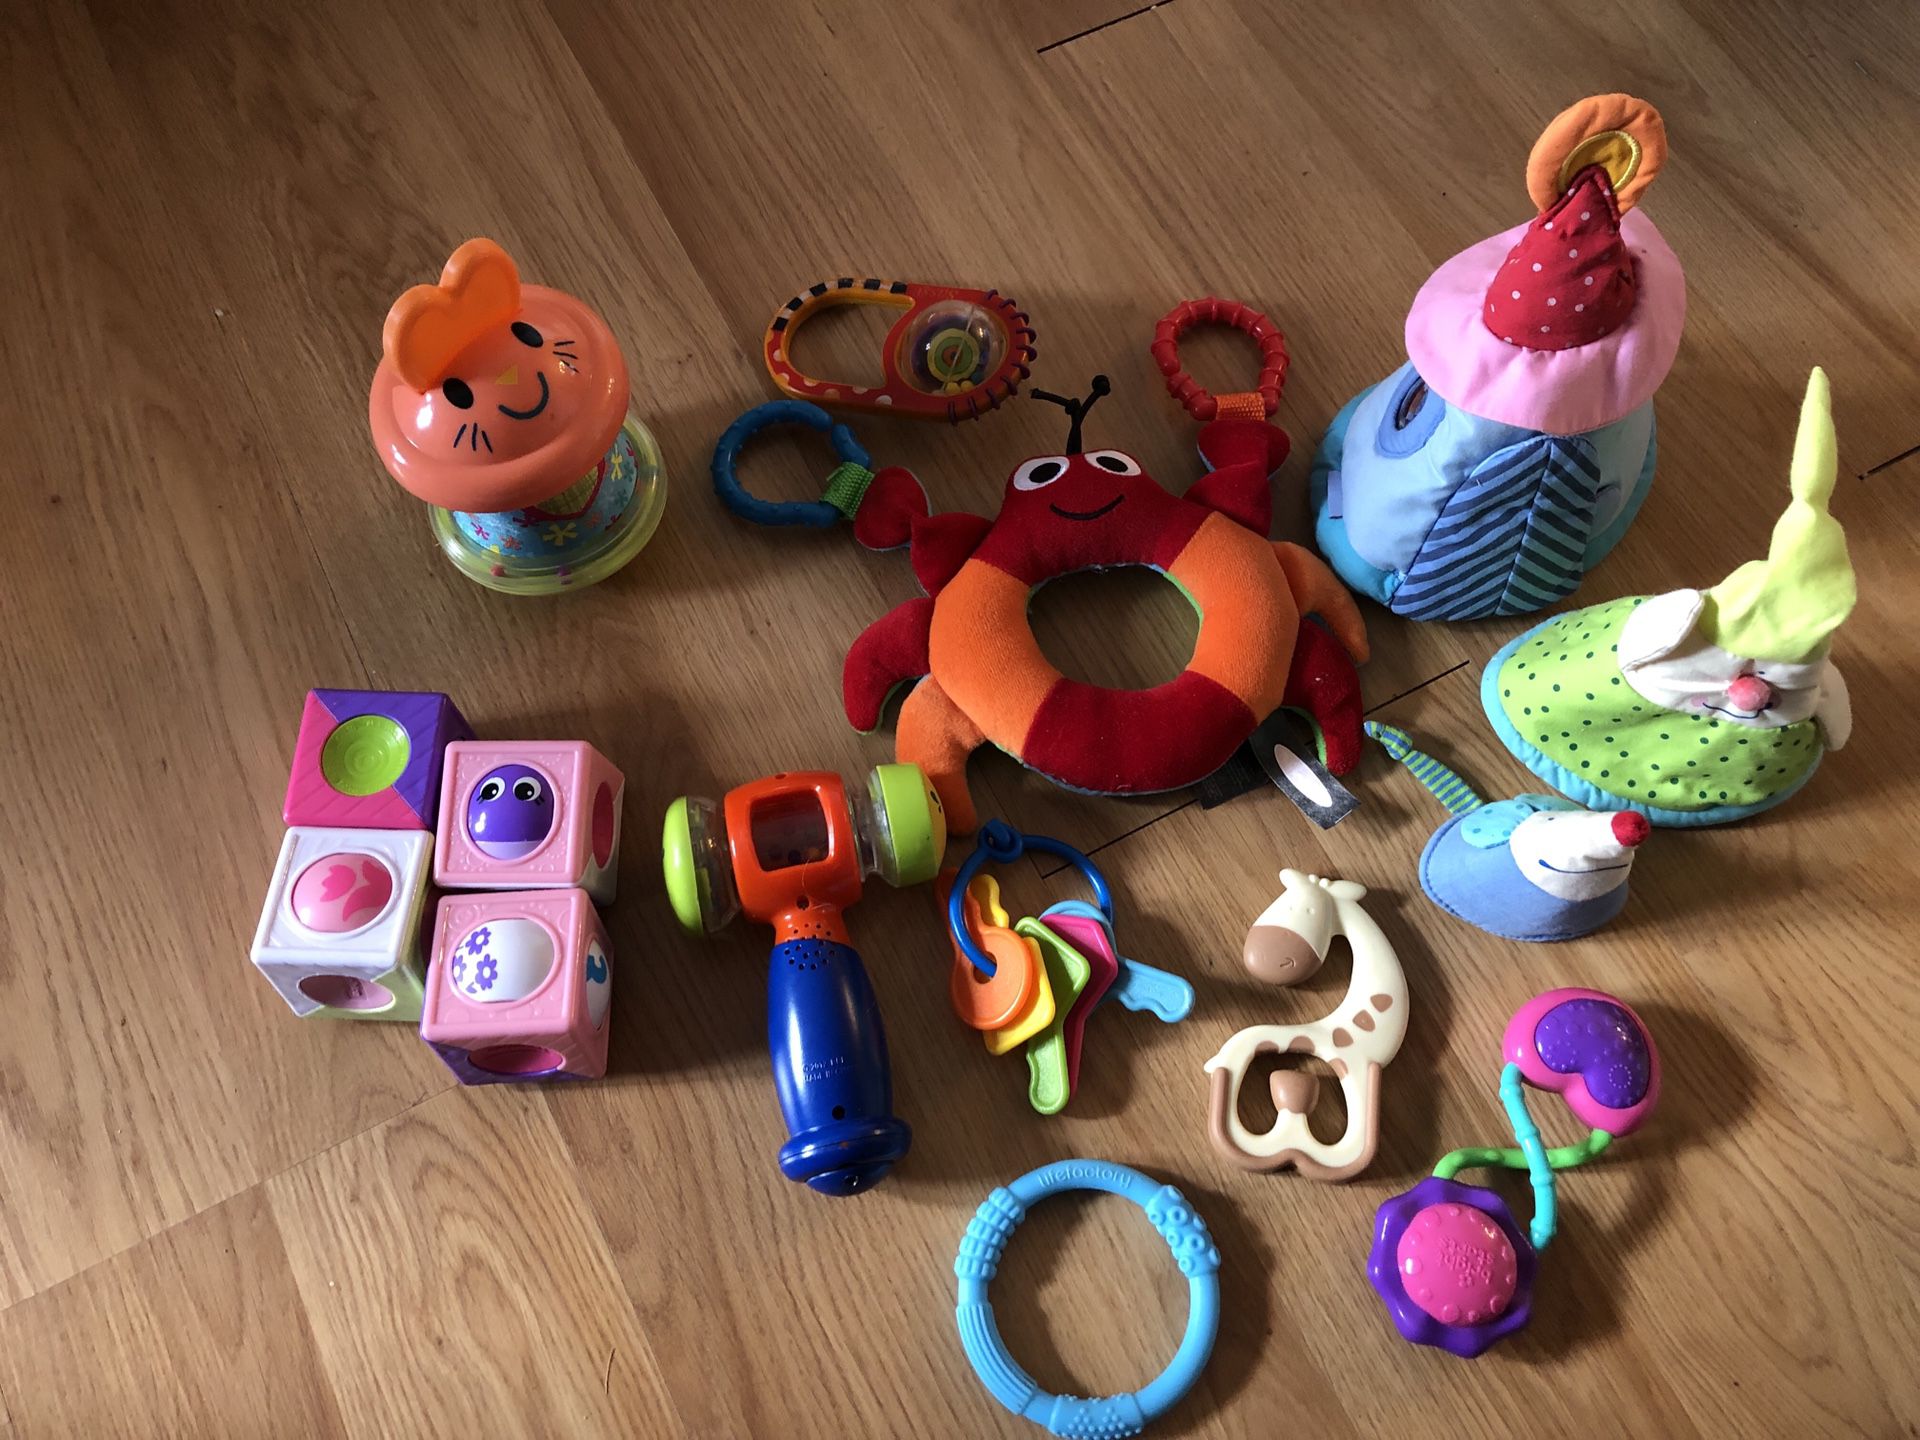 Lot of infant toys